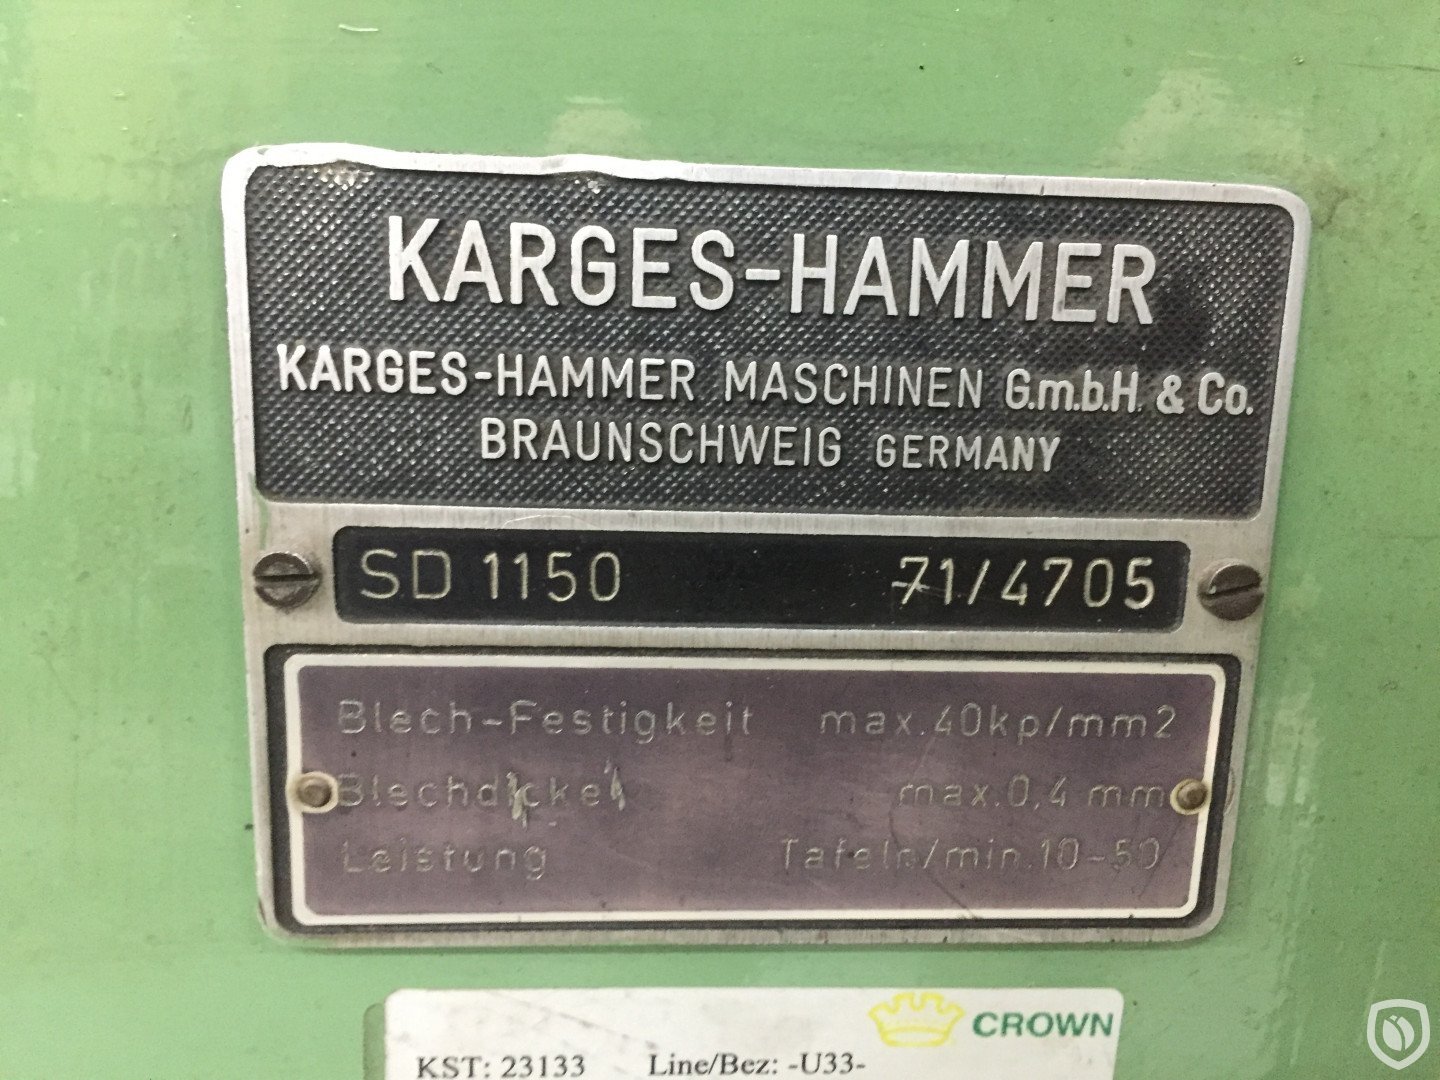 Karges Hammer SD 1150